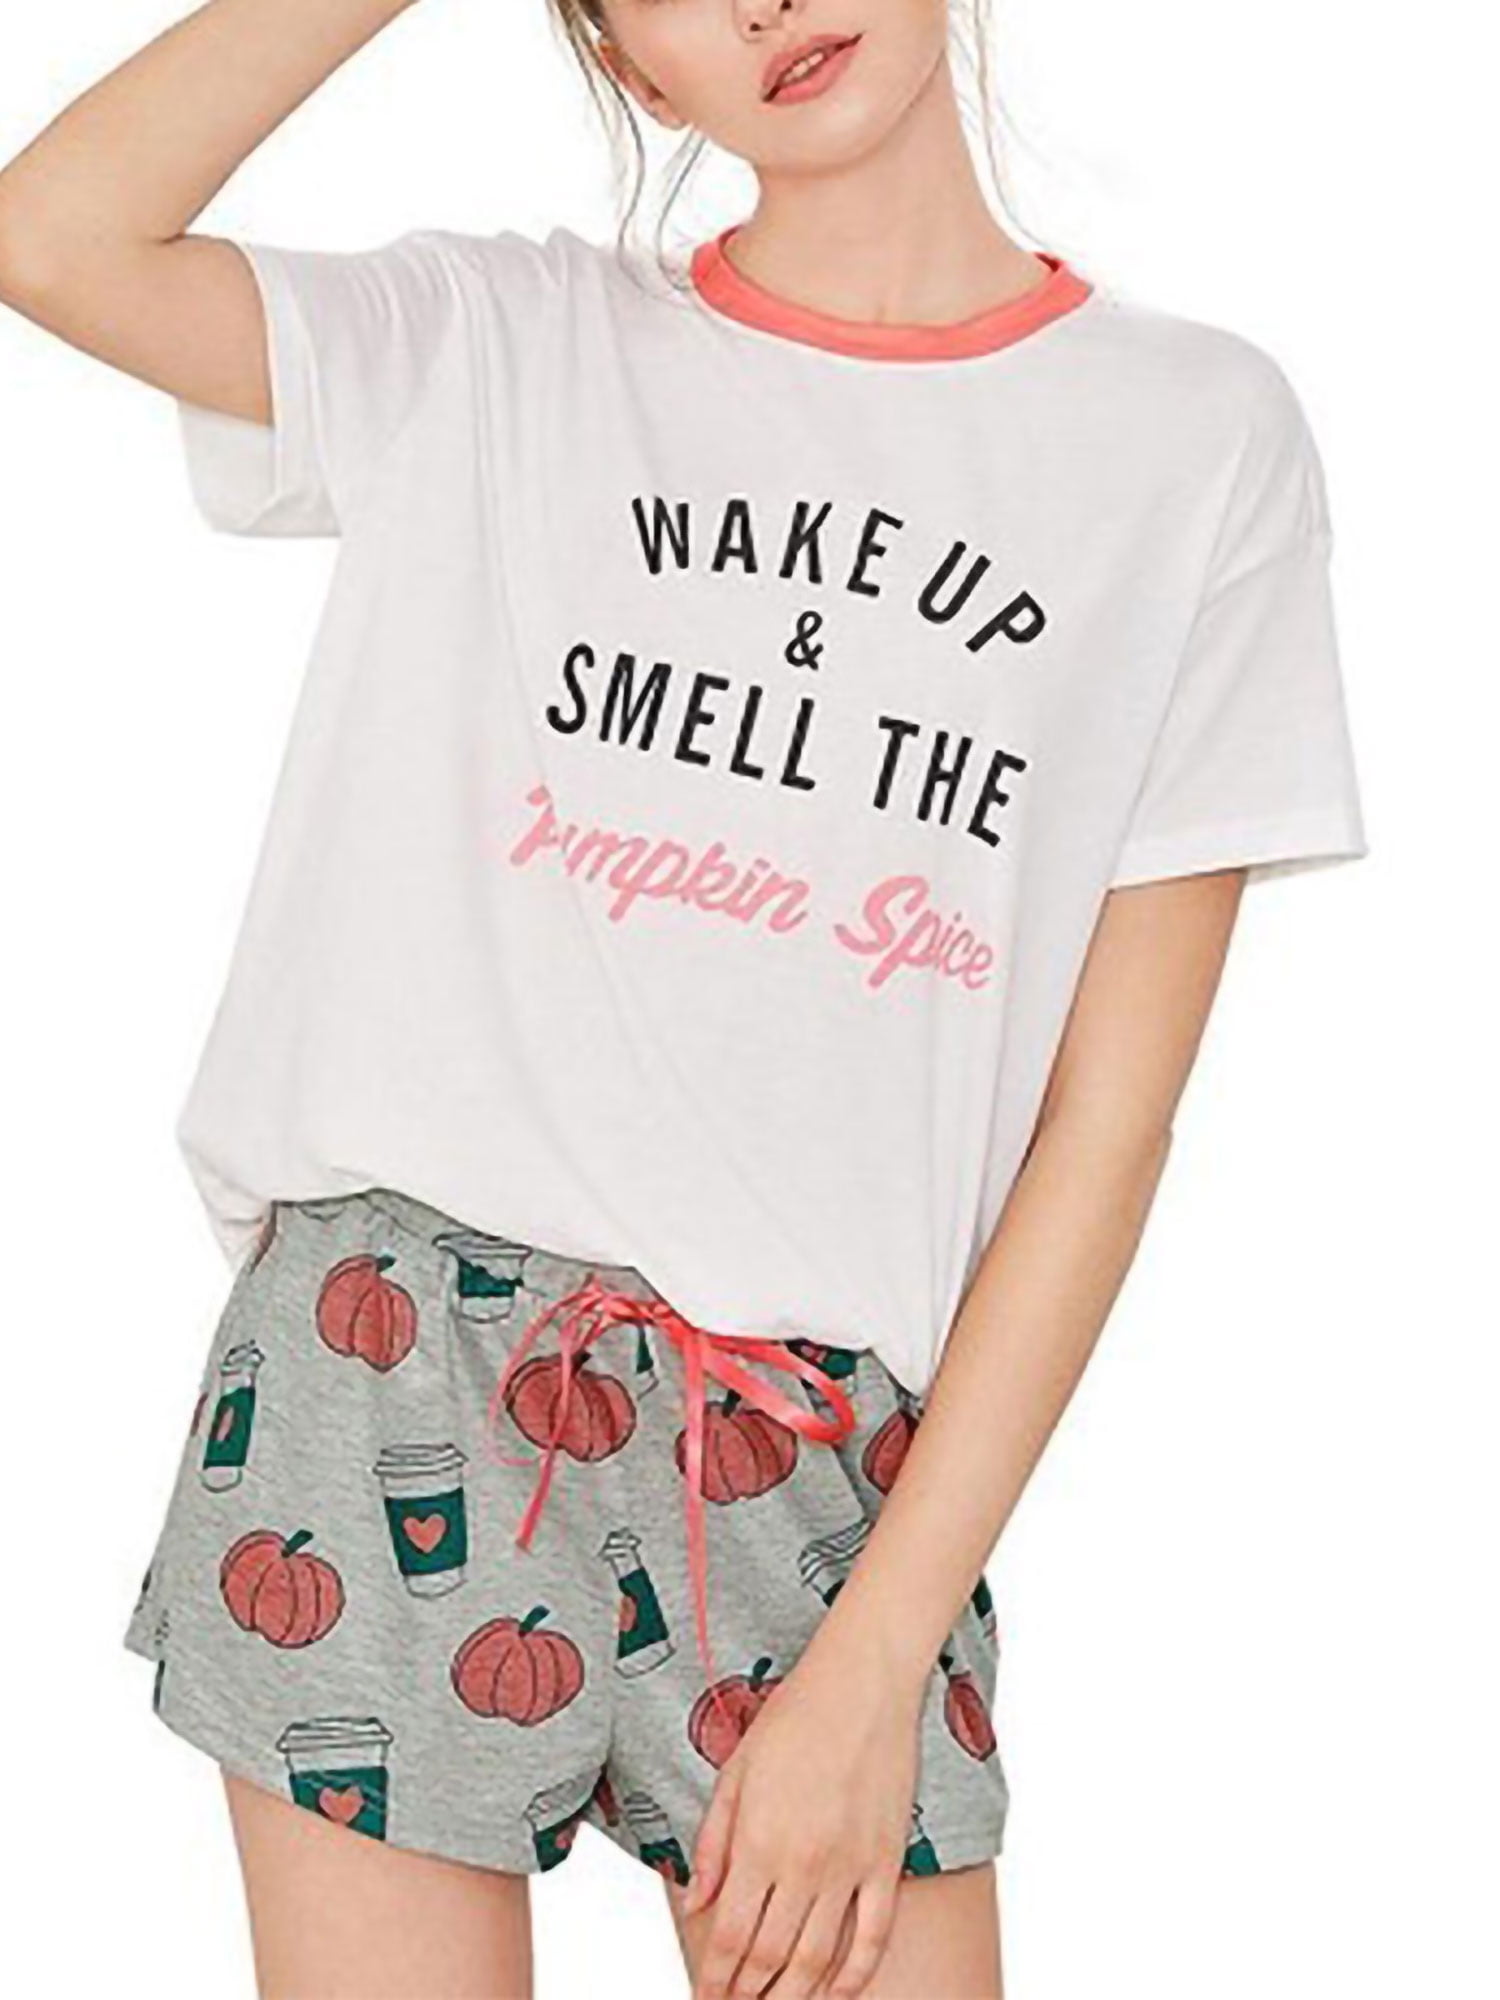 Girl Tee Shirt Summer Short Sleeve Crewneck Cotton Casual Graphic Cartoon Tops T-Shirt 3 Packs Sets